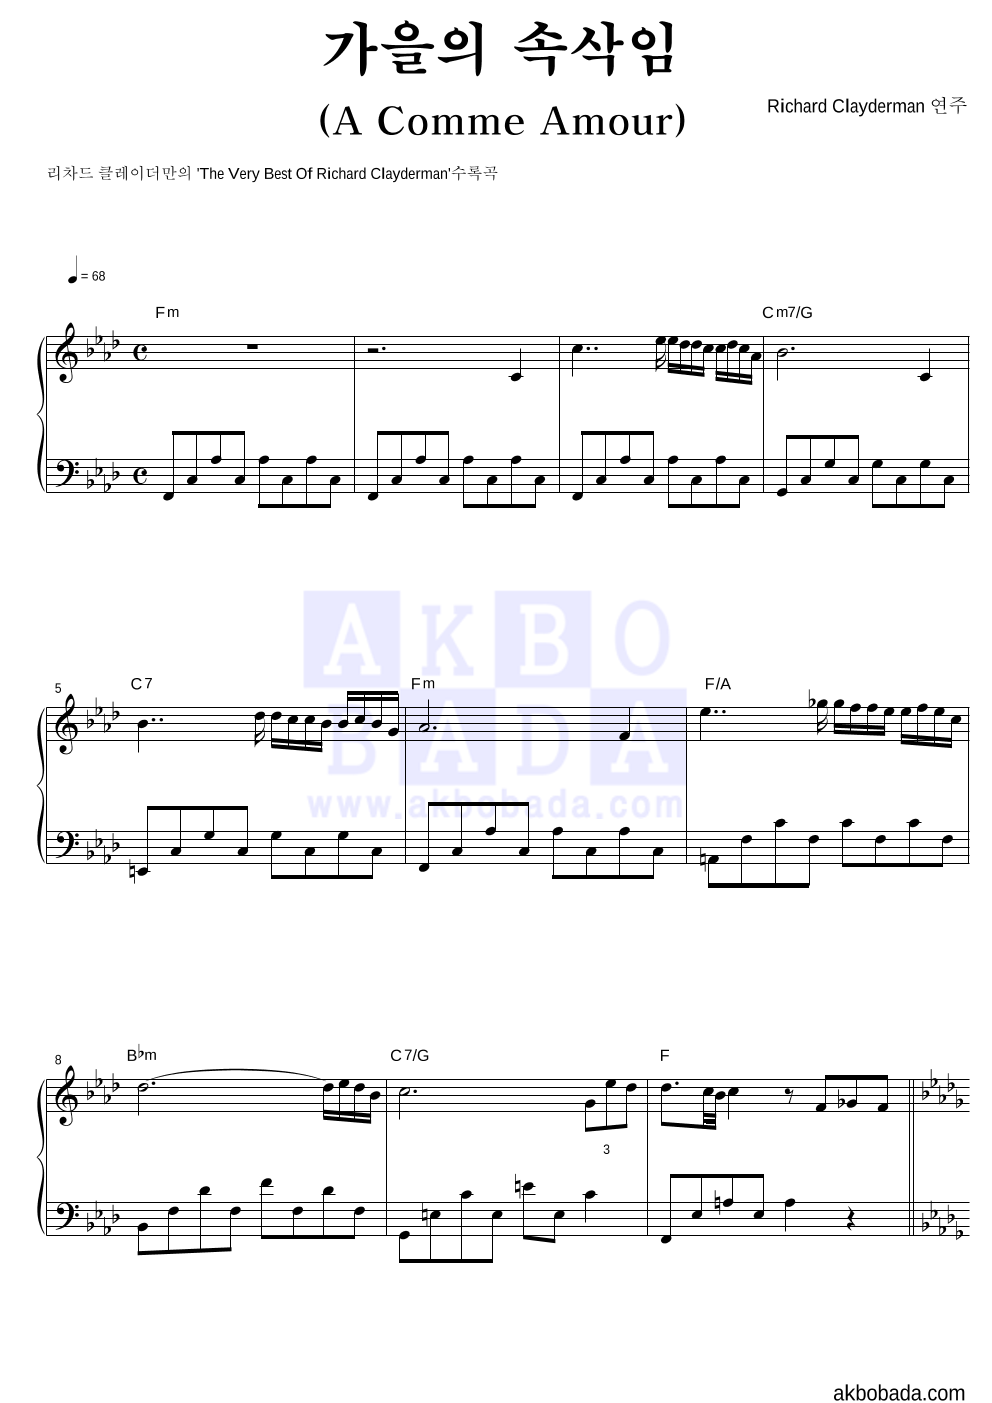 Richard Clayderman  - 가을의 속삭임 피아노 2단 악보 